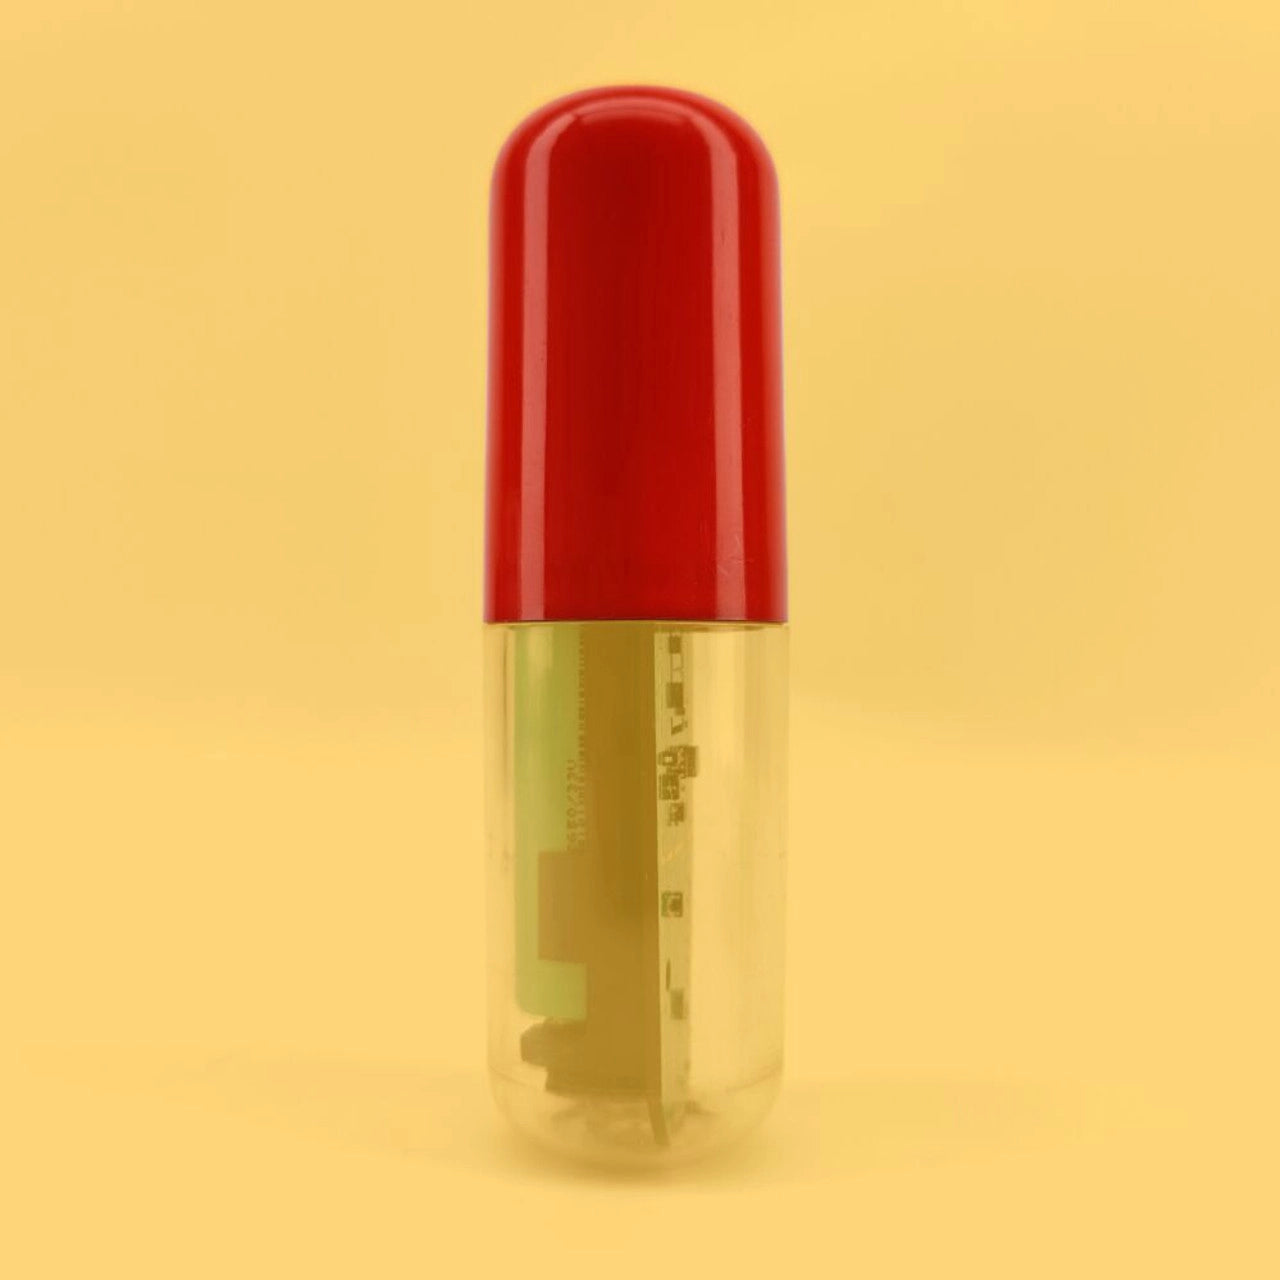 RAPT Pill - Red Housing - All Things Fermented | Home Brew Shop NZ | Supplies | Equipment